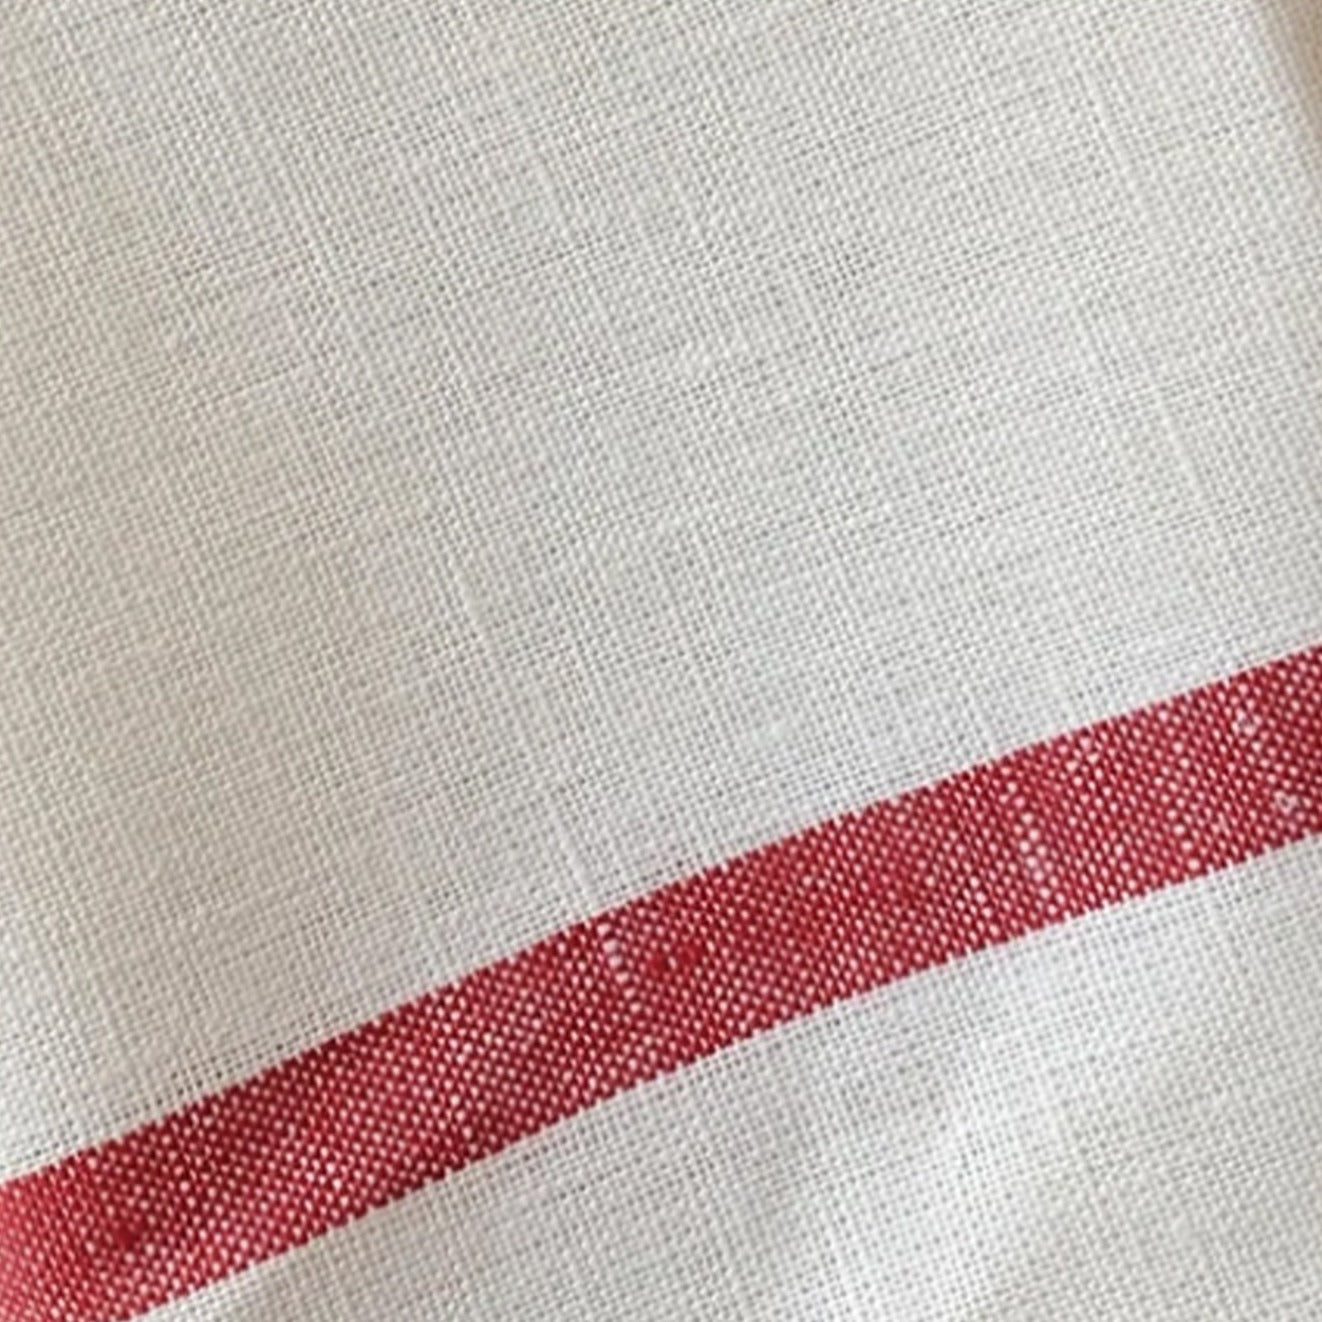 Fog Linen Work Tea Towel - White with Red Stripe